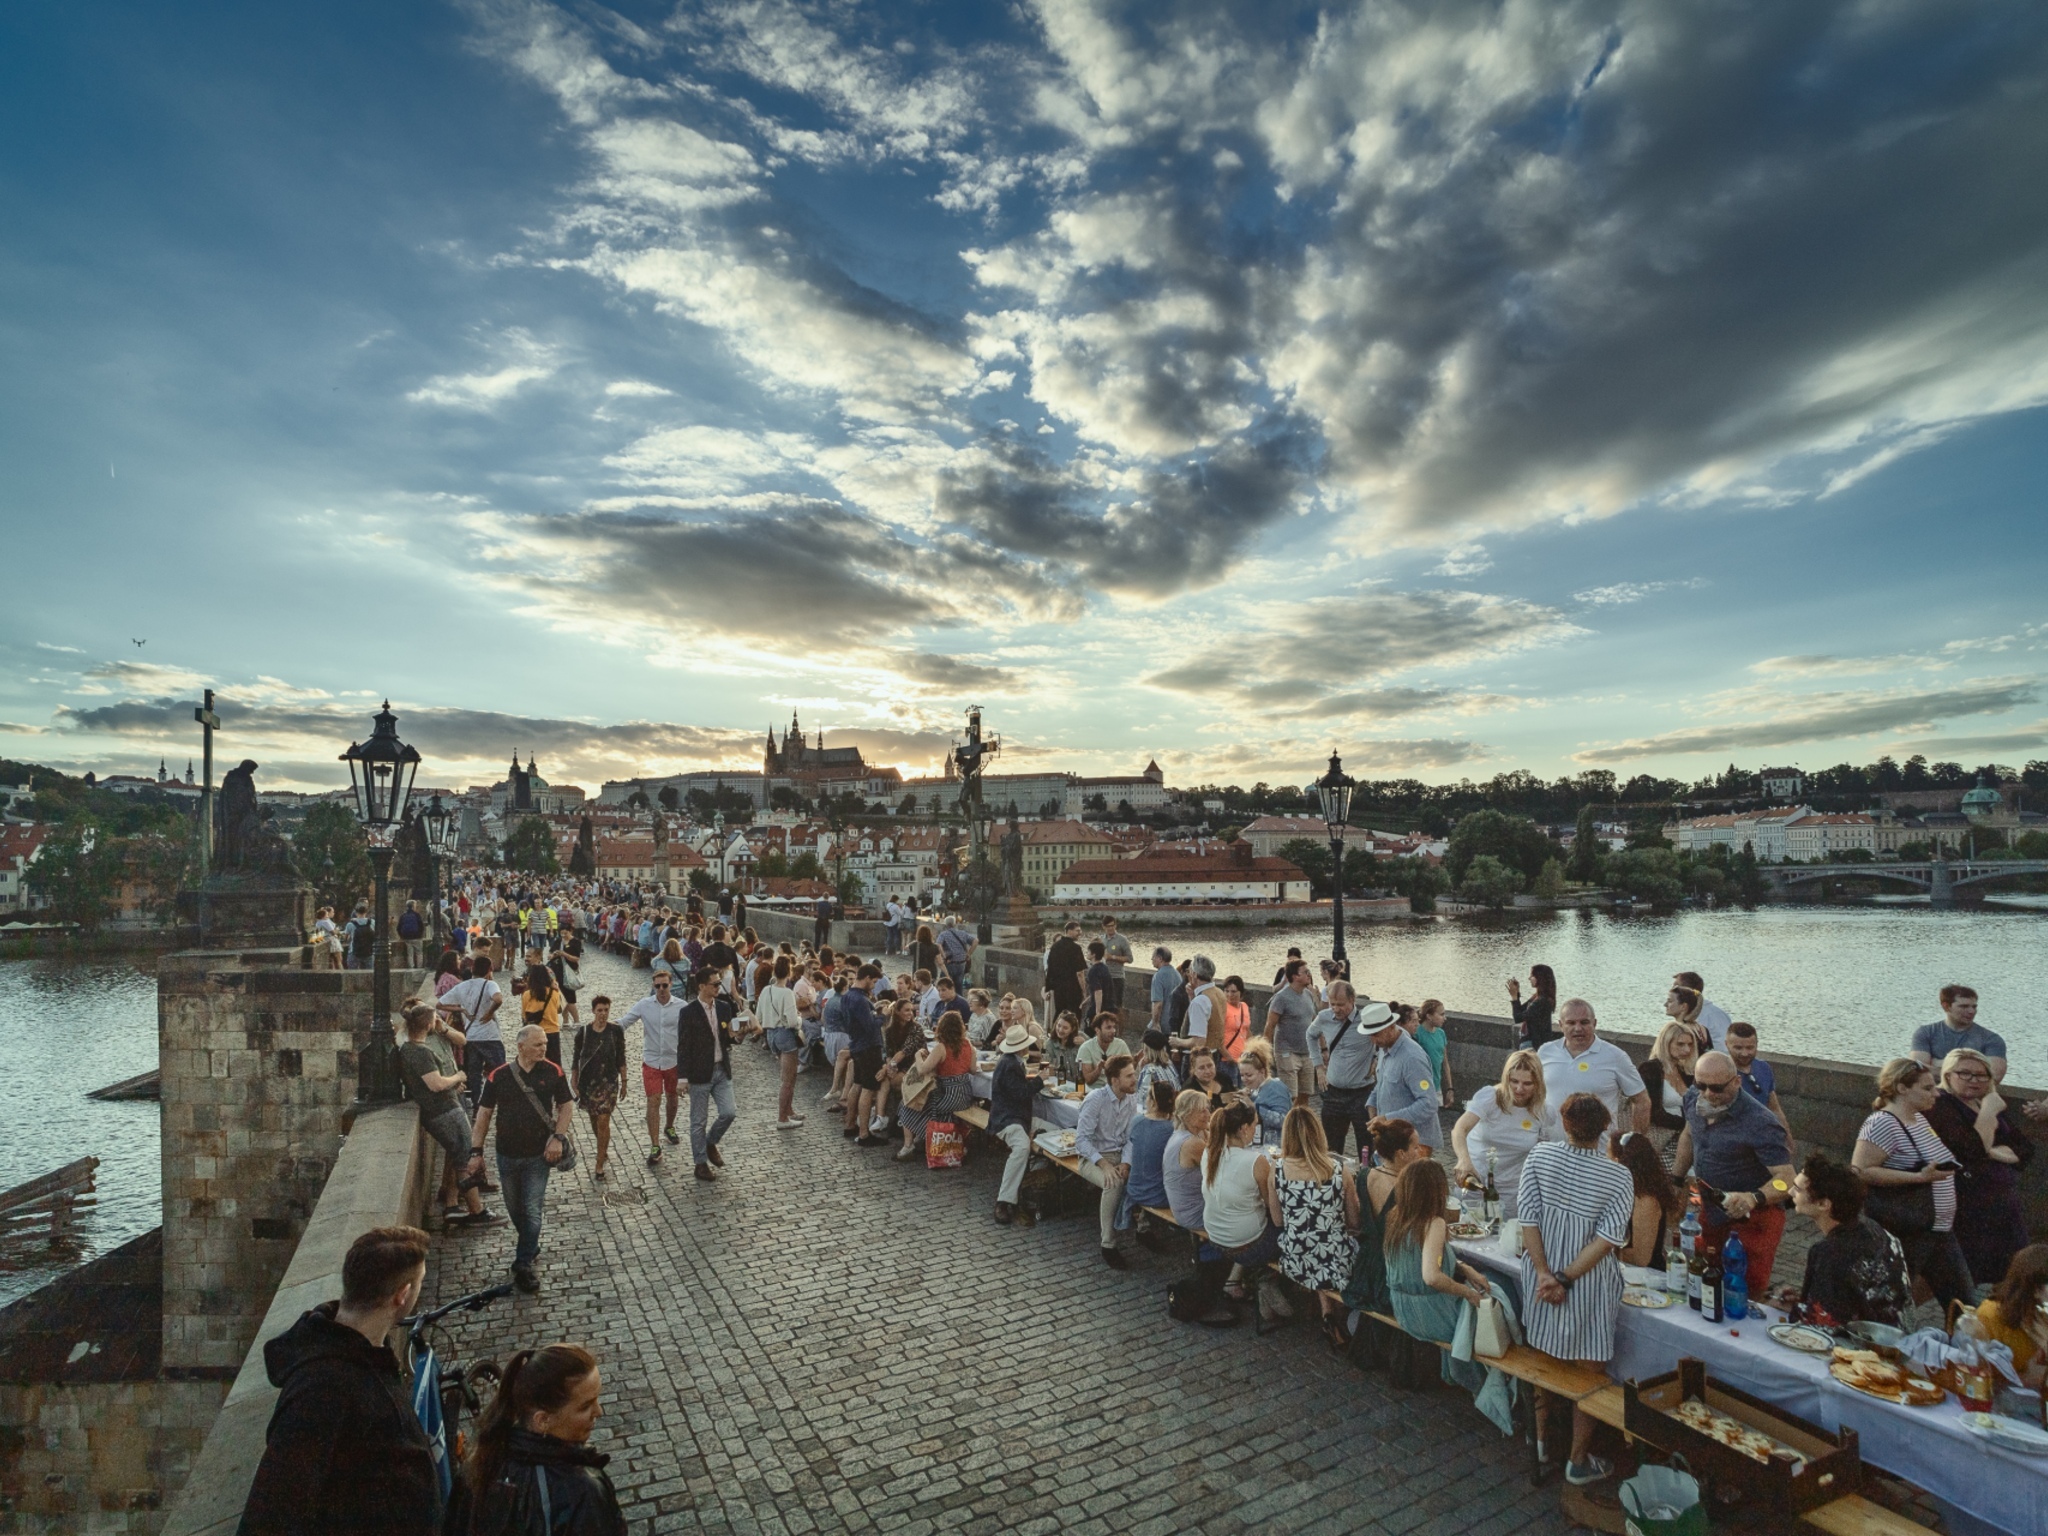 As Prague lifts lockdown, locals held a feast